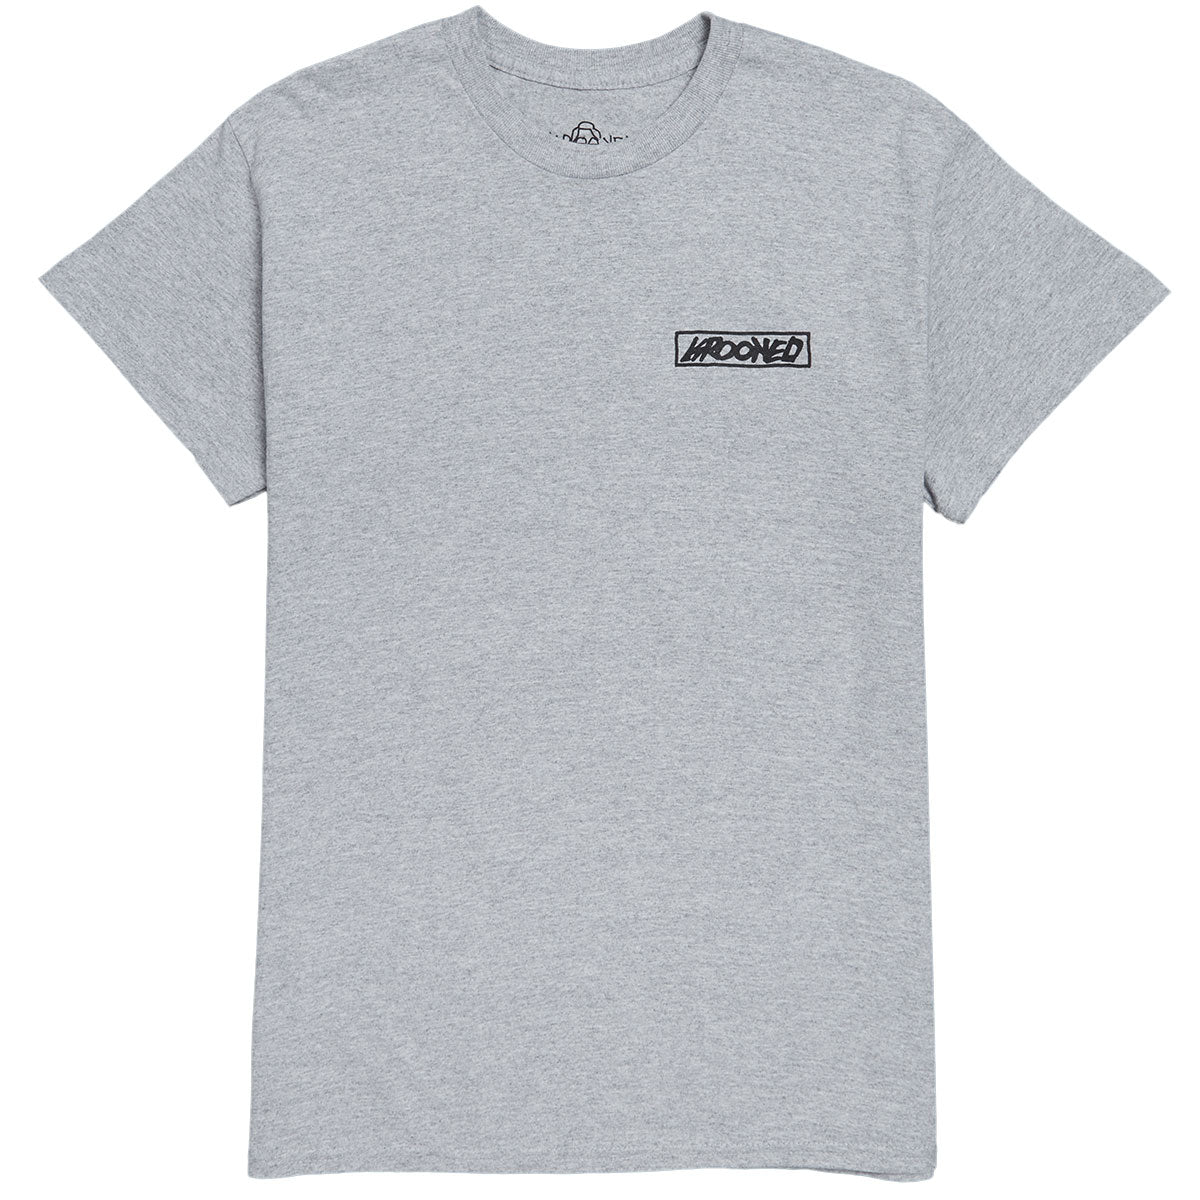 Krooked Moonsmile Raw T-Shirt - Sport Grey/Black image 2